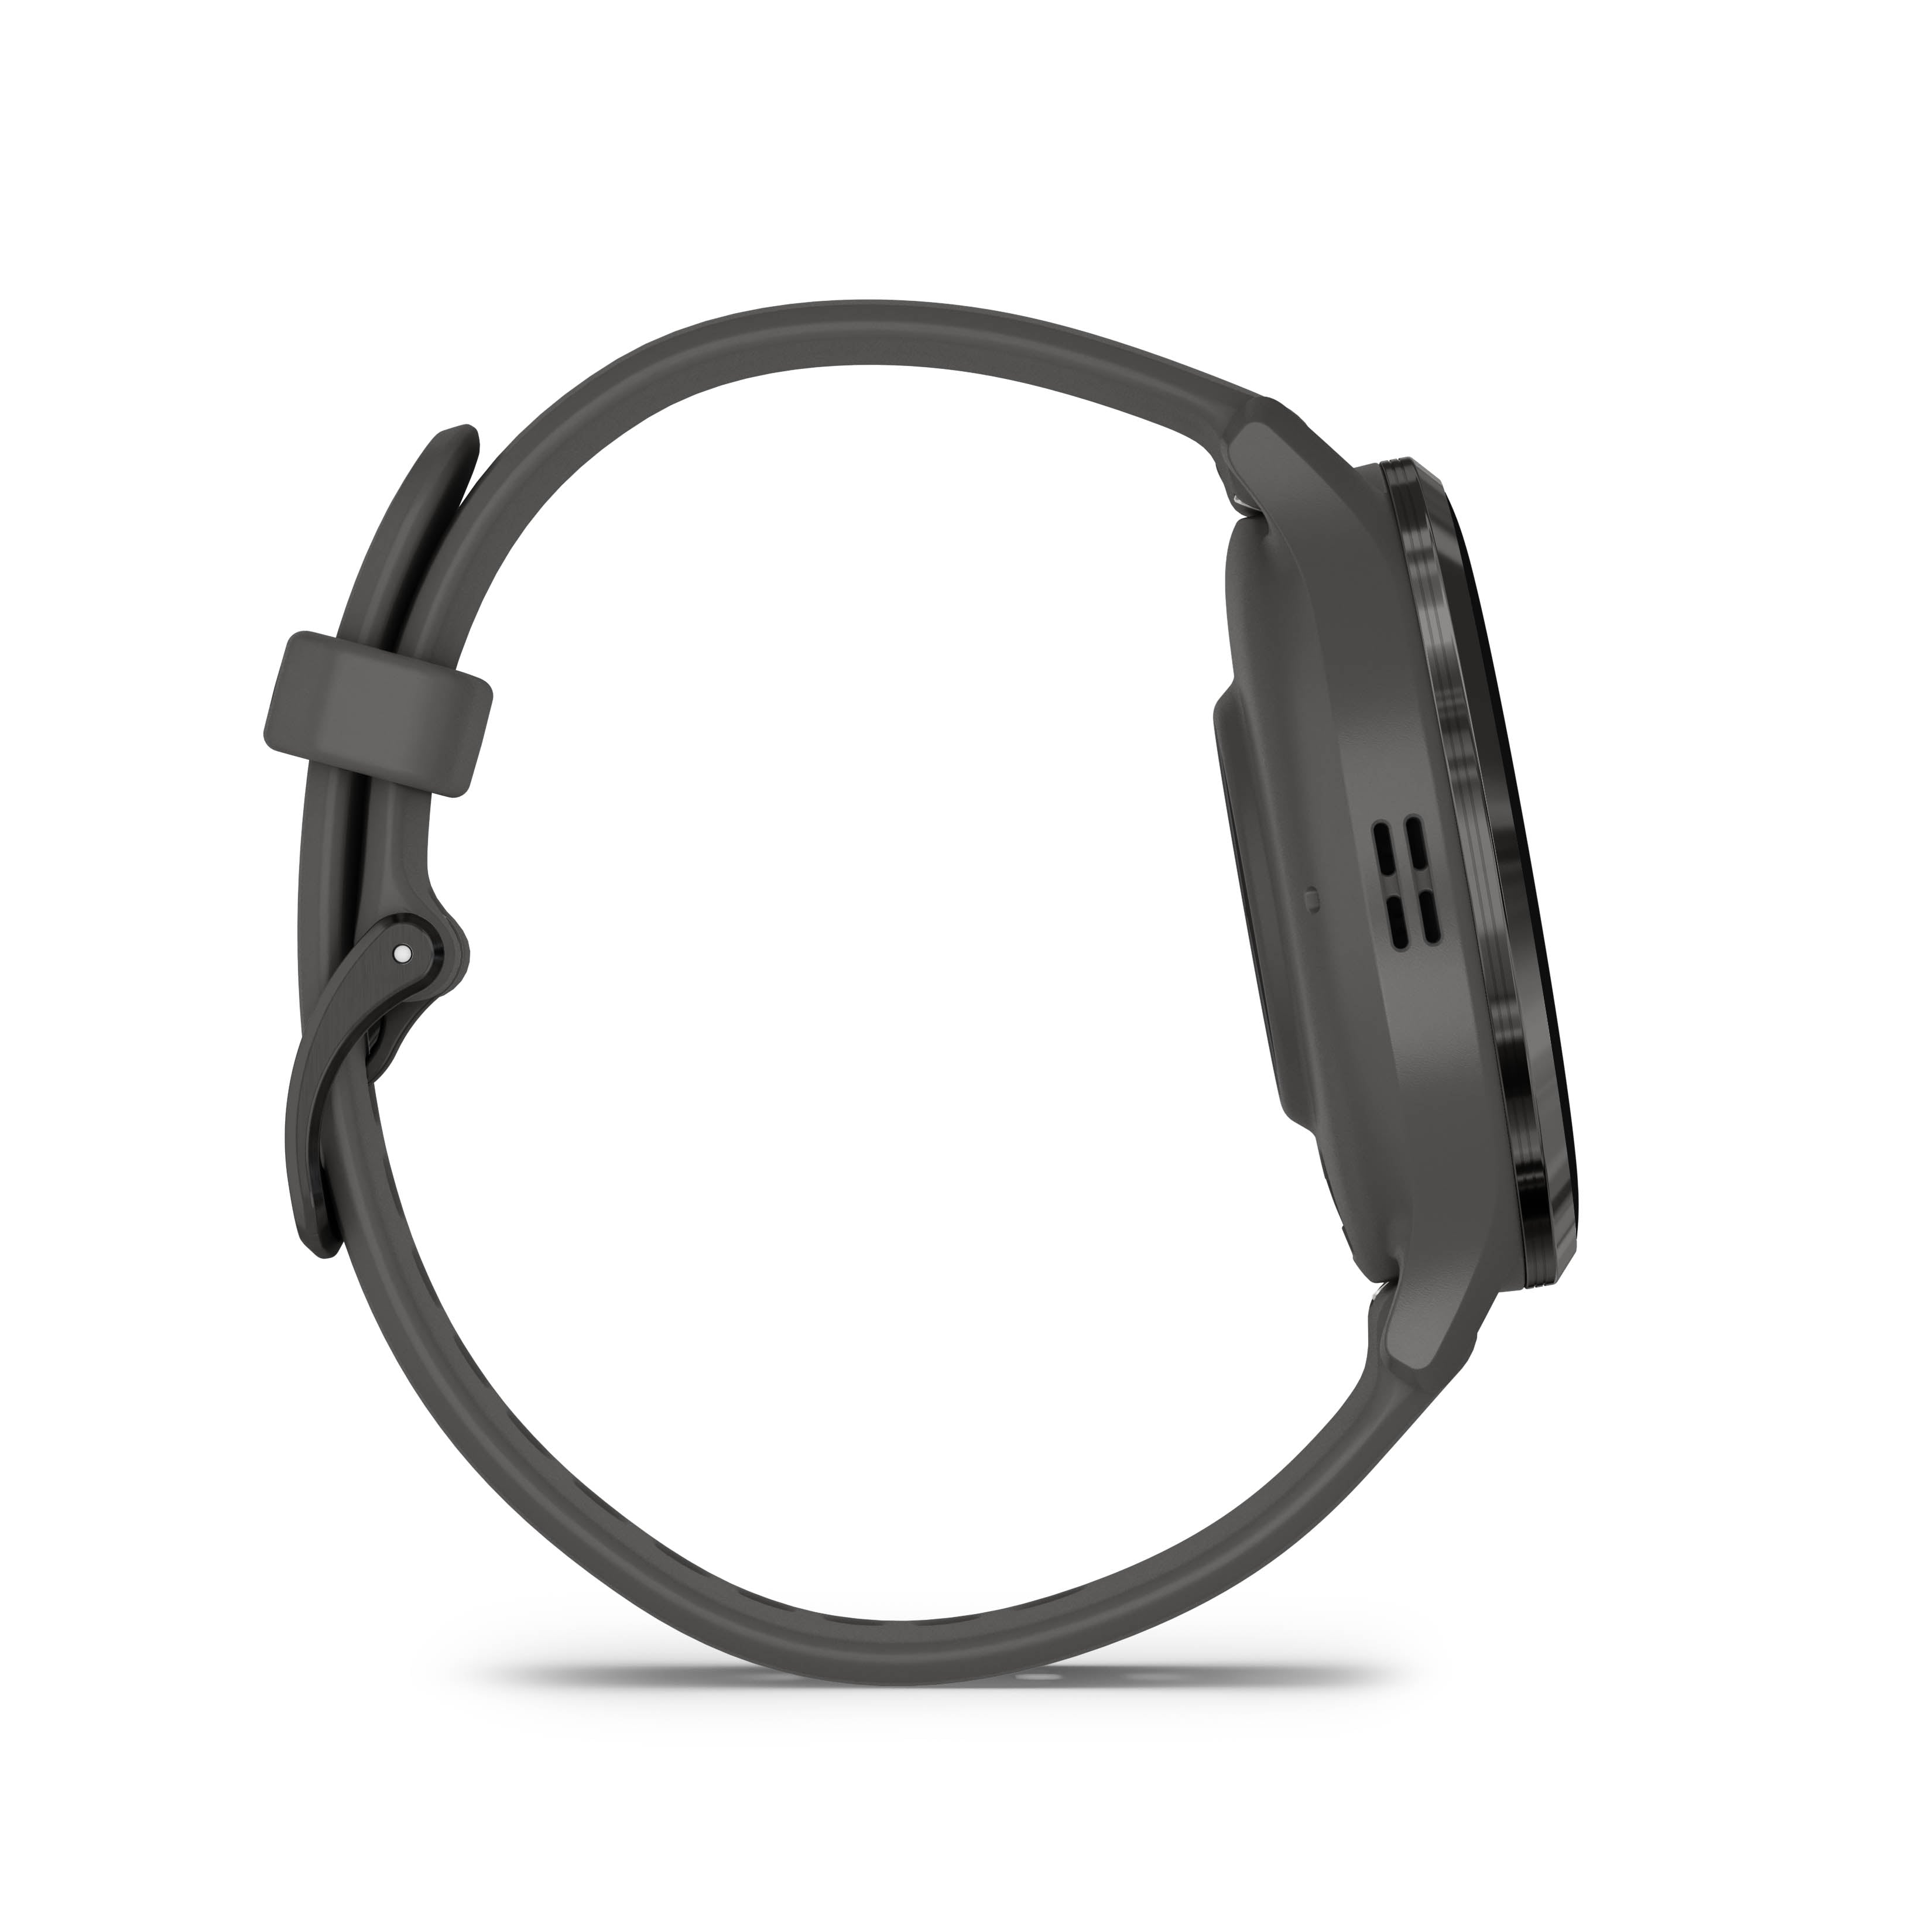 Garmin Venu 3S Smartwatch Review - Consumer Reports